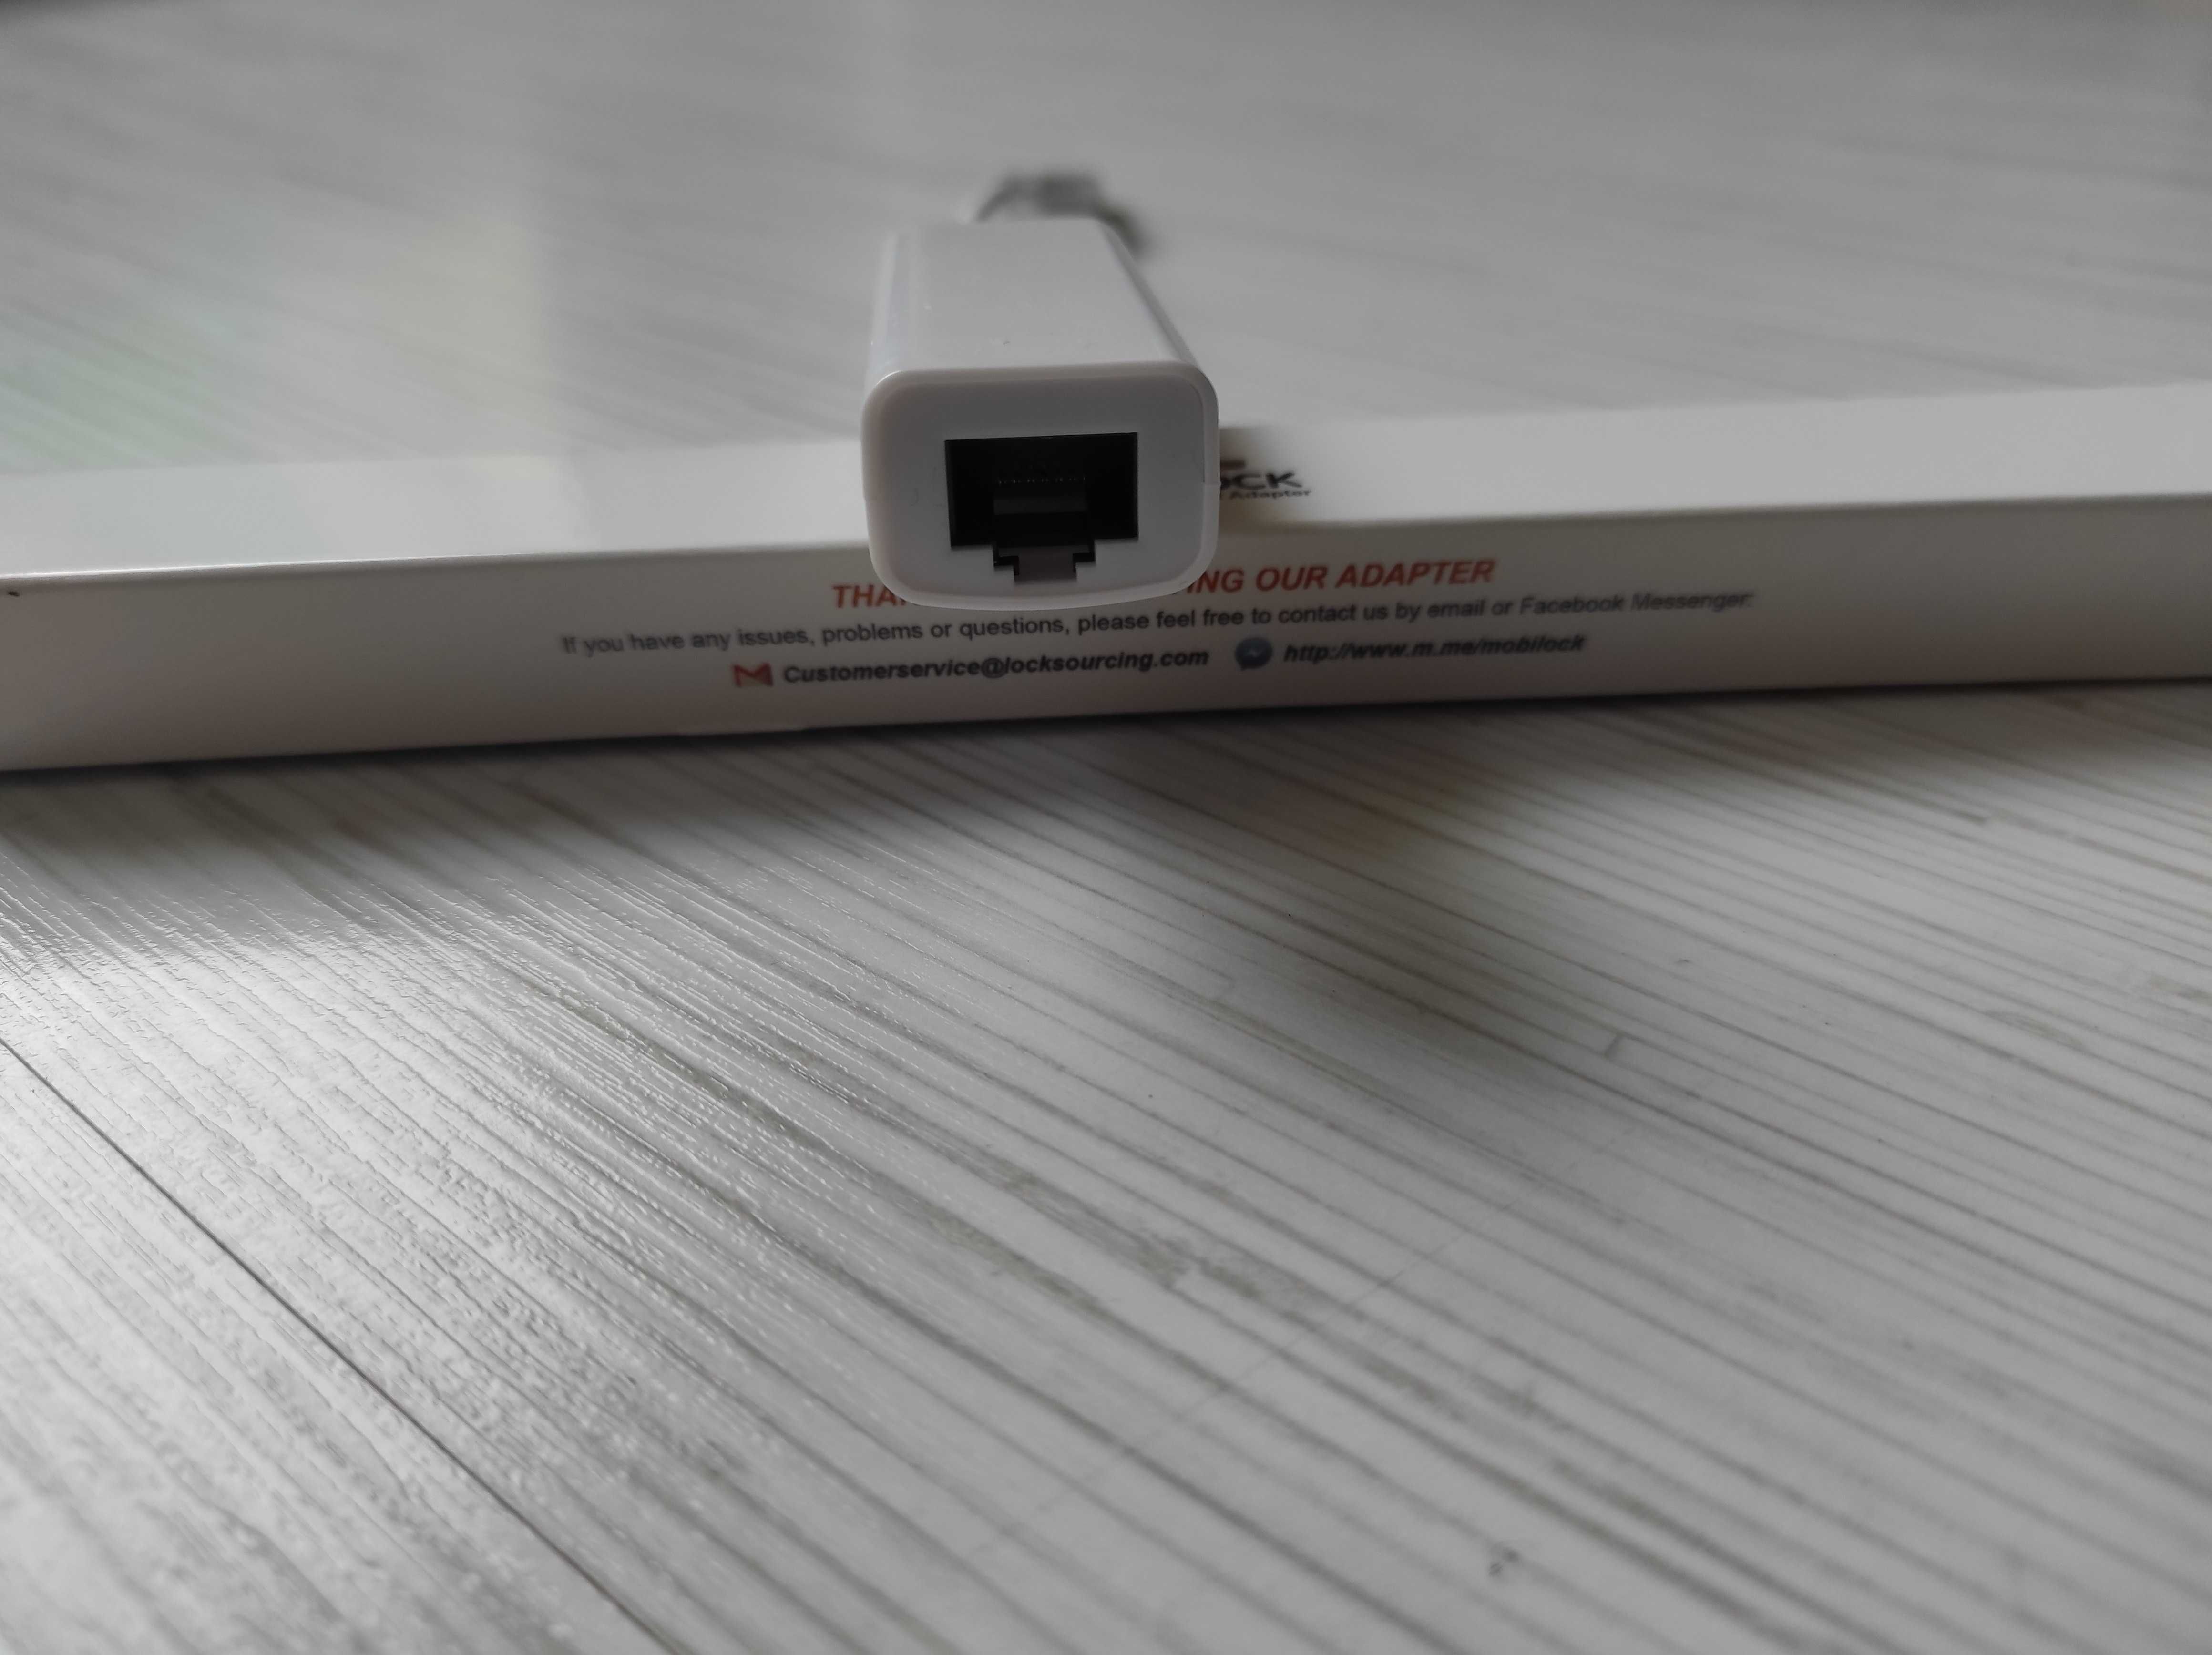 Adapter USB 2.0 do Ethernet Mobi Lock (Nowy)